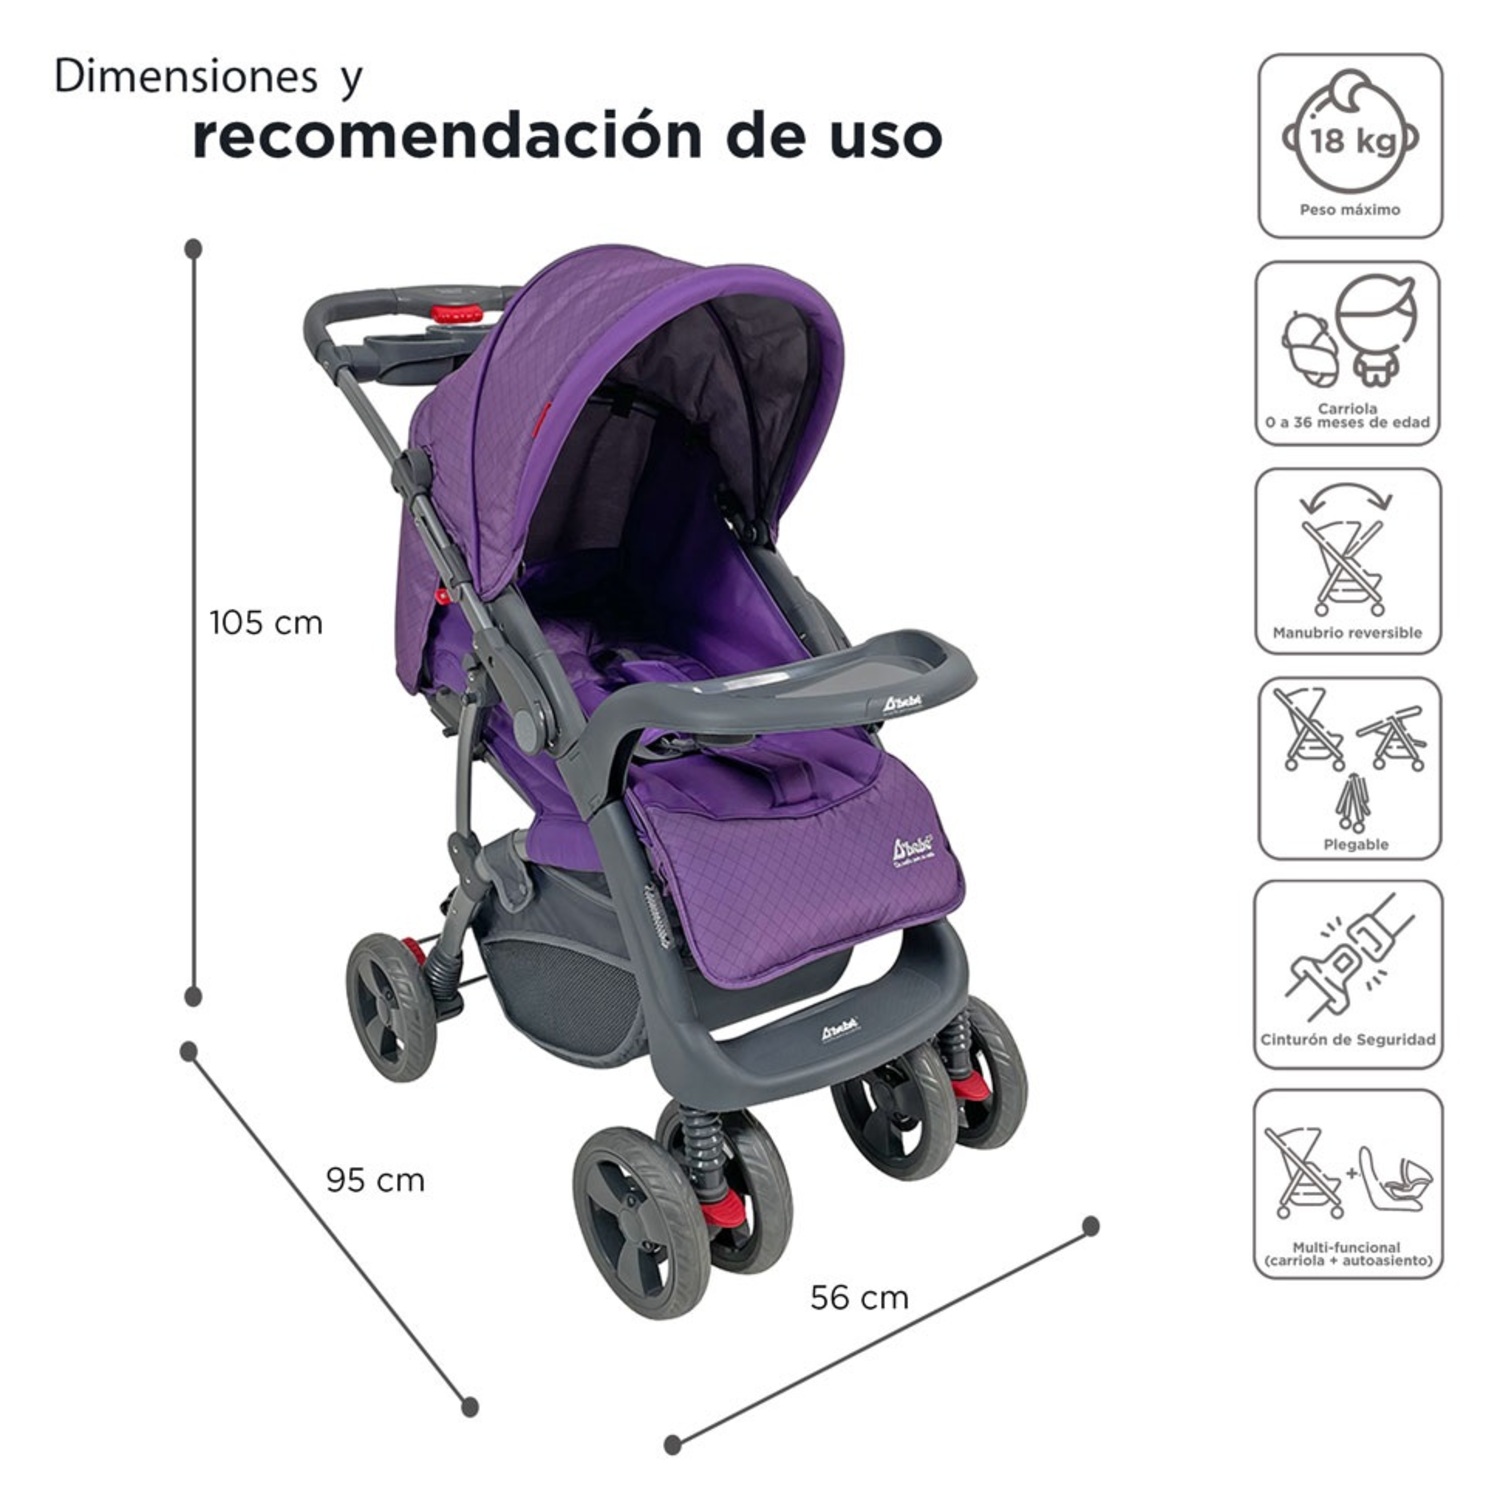 Carriola Travel System Aventura Khaki - D'bebé : Productos para bebé